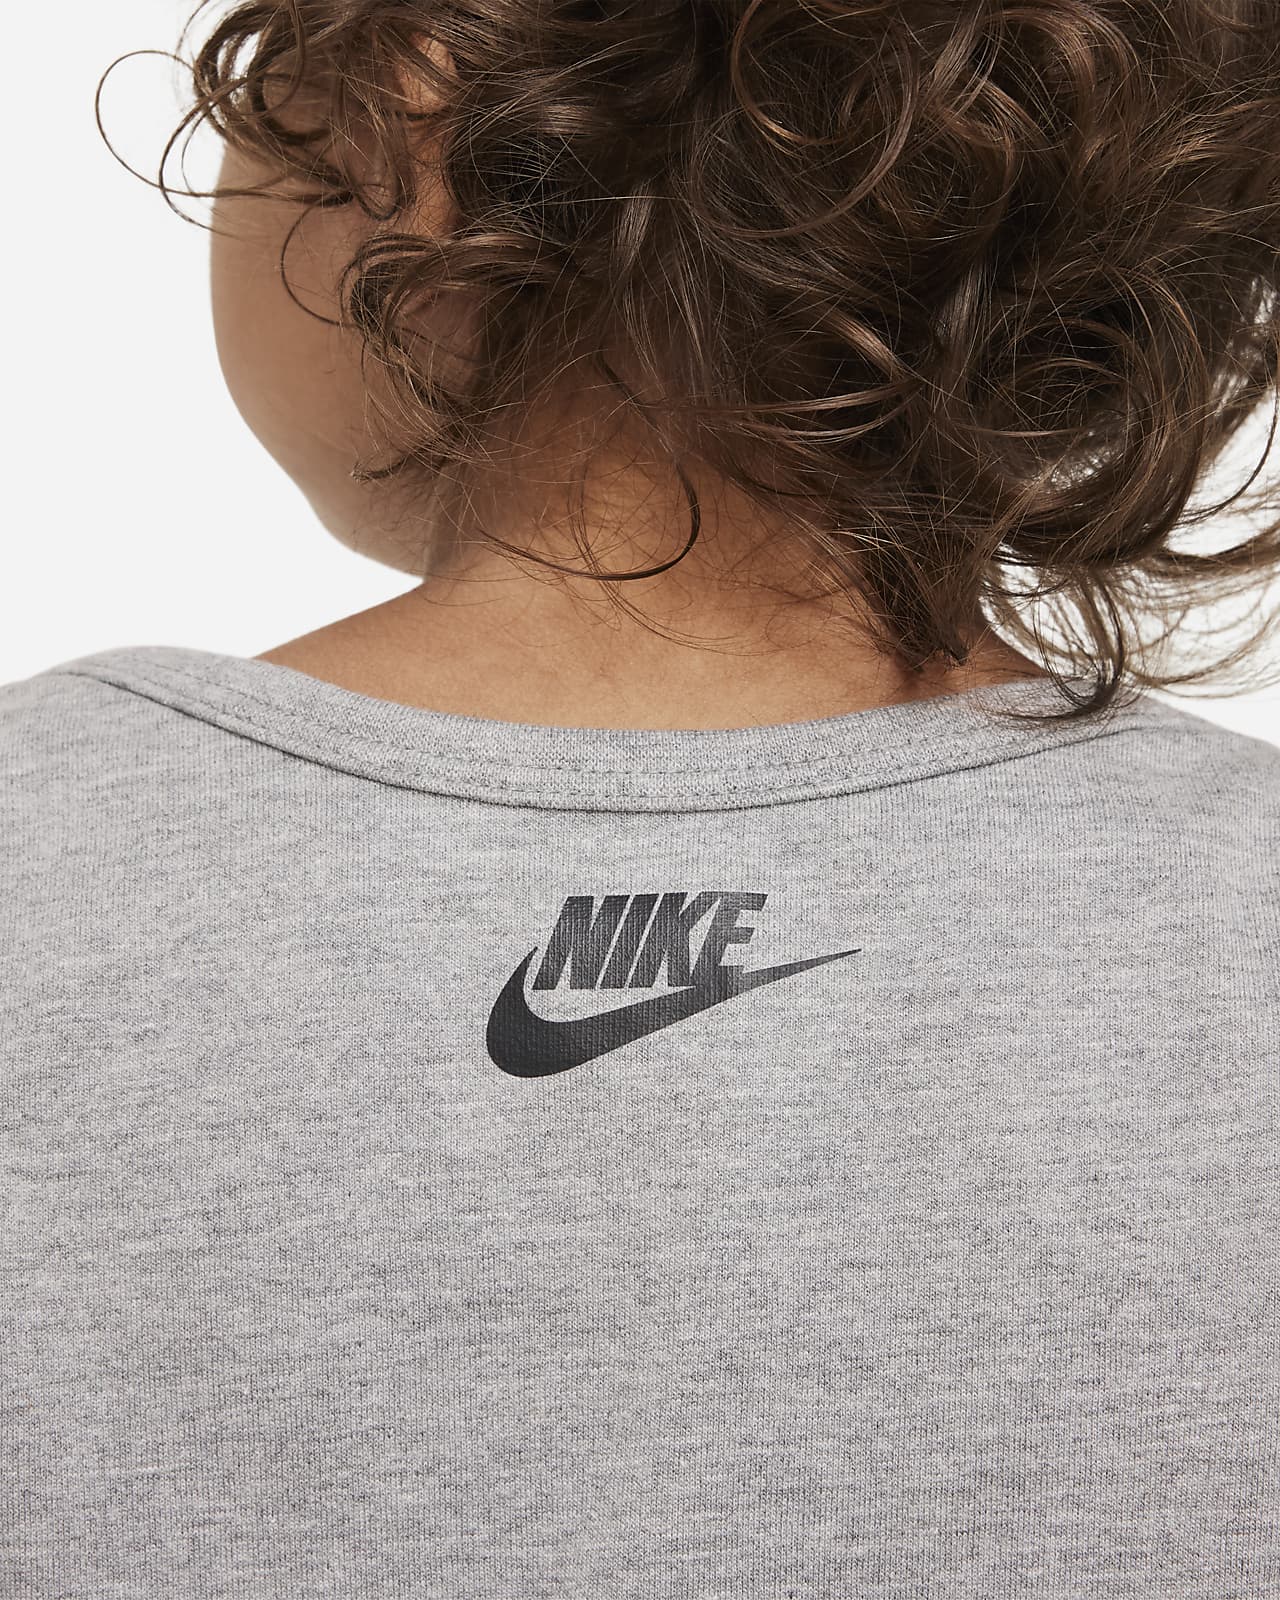 Nike Sportswear Baby (12-24M) Nike.com